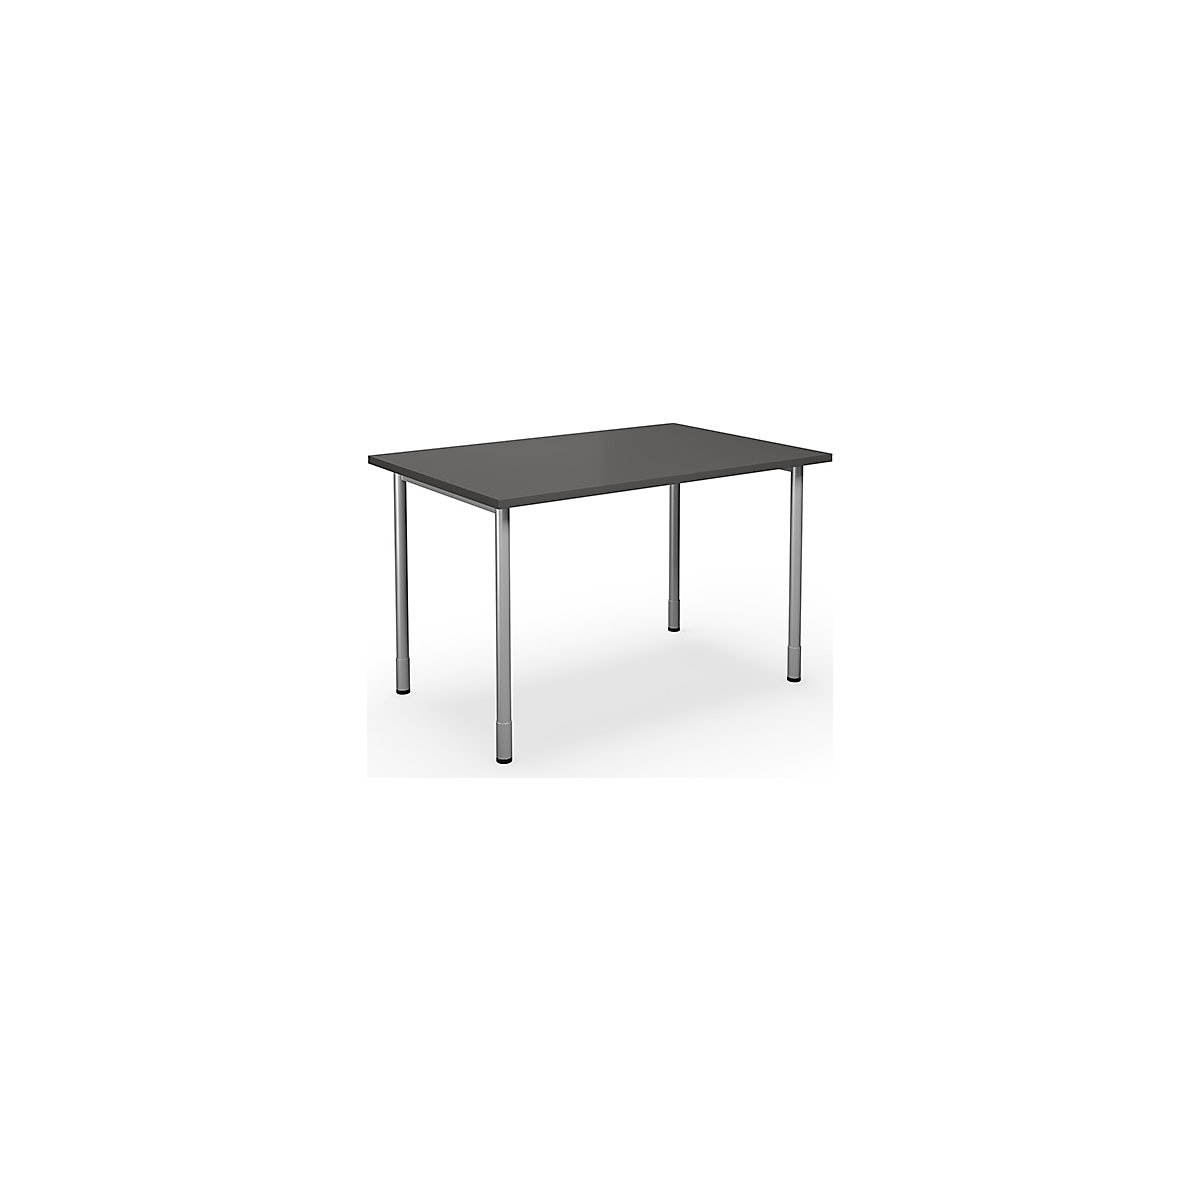 DUO-C multi-purpose desk, straight tabletop, WxD 1200 x 800 mm, dark grey, silver-16